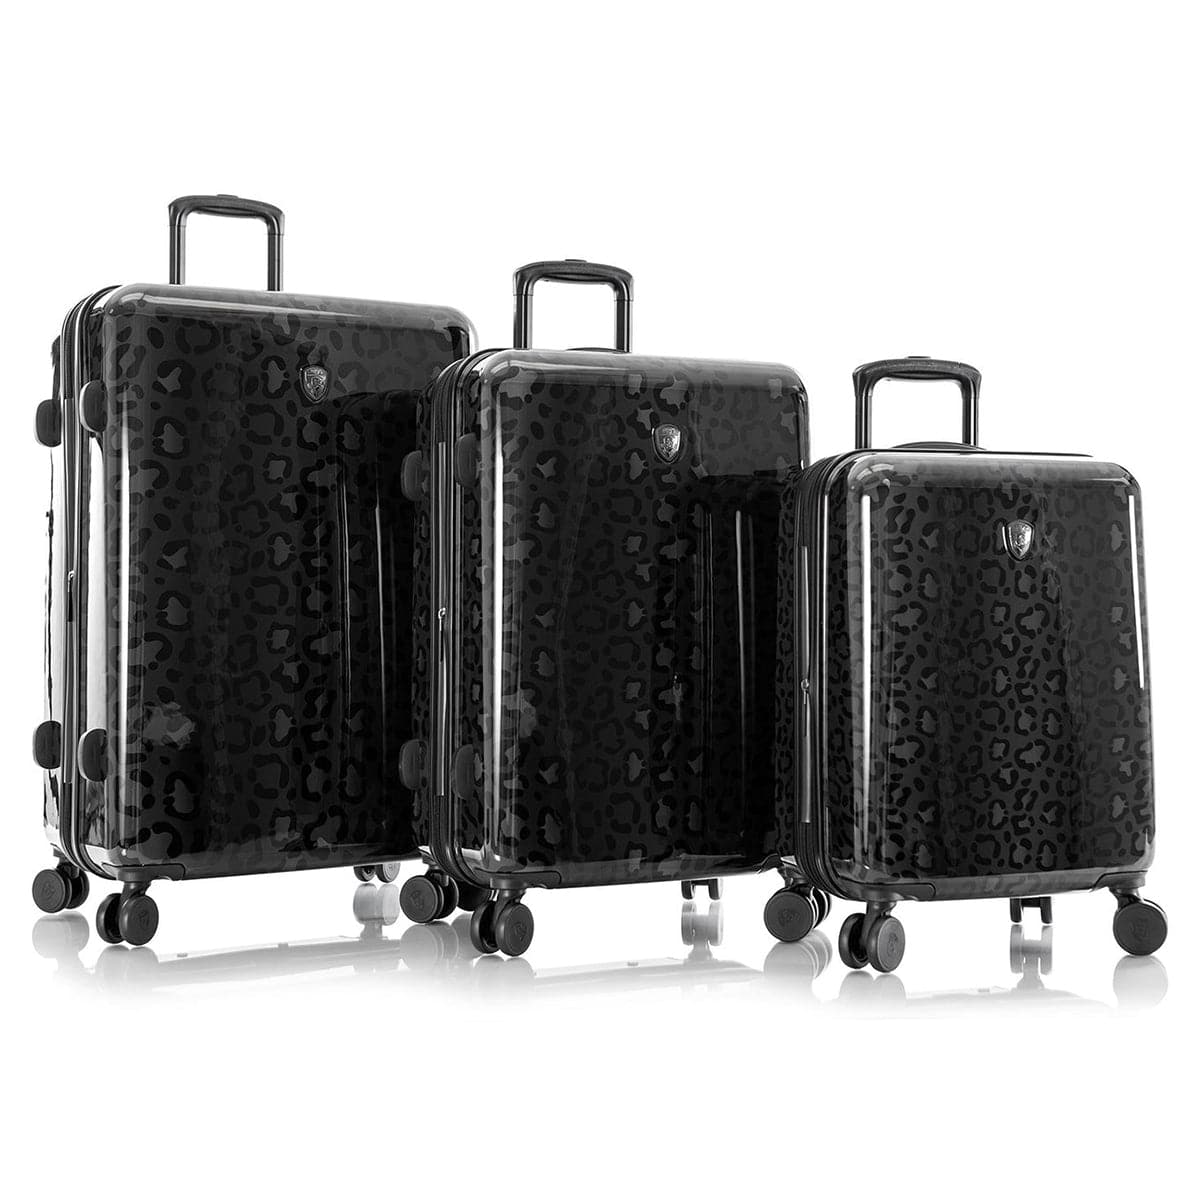 Heys Leopard Fashion Spinner 3 Piece Luggage Set